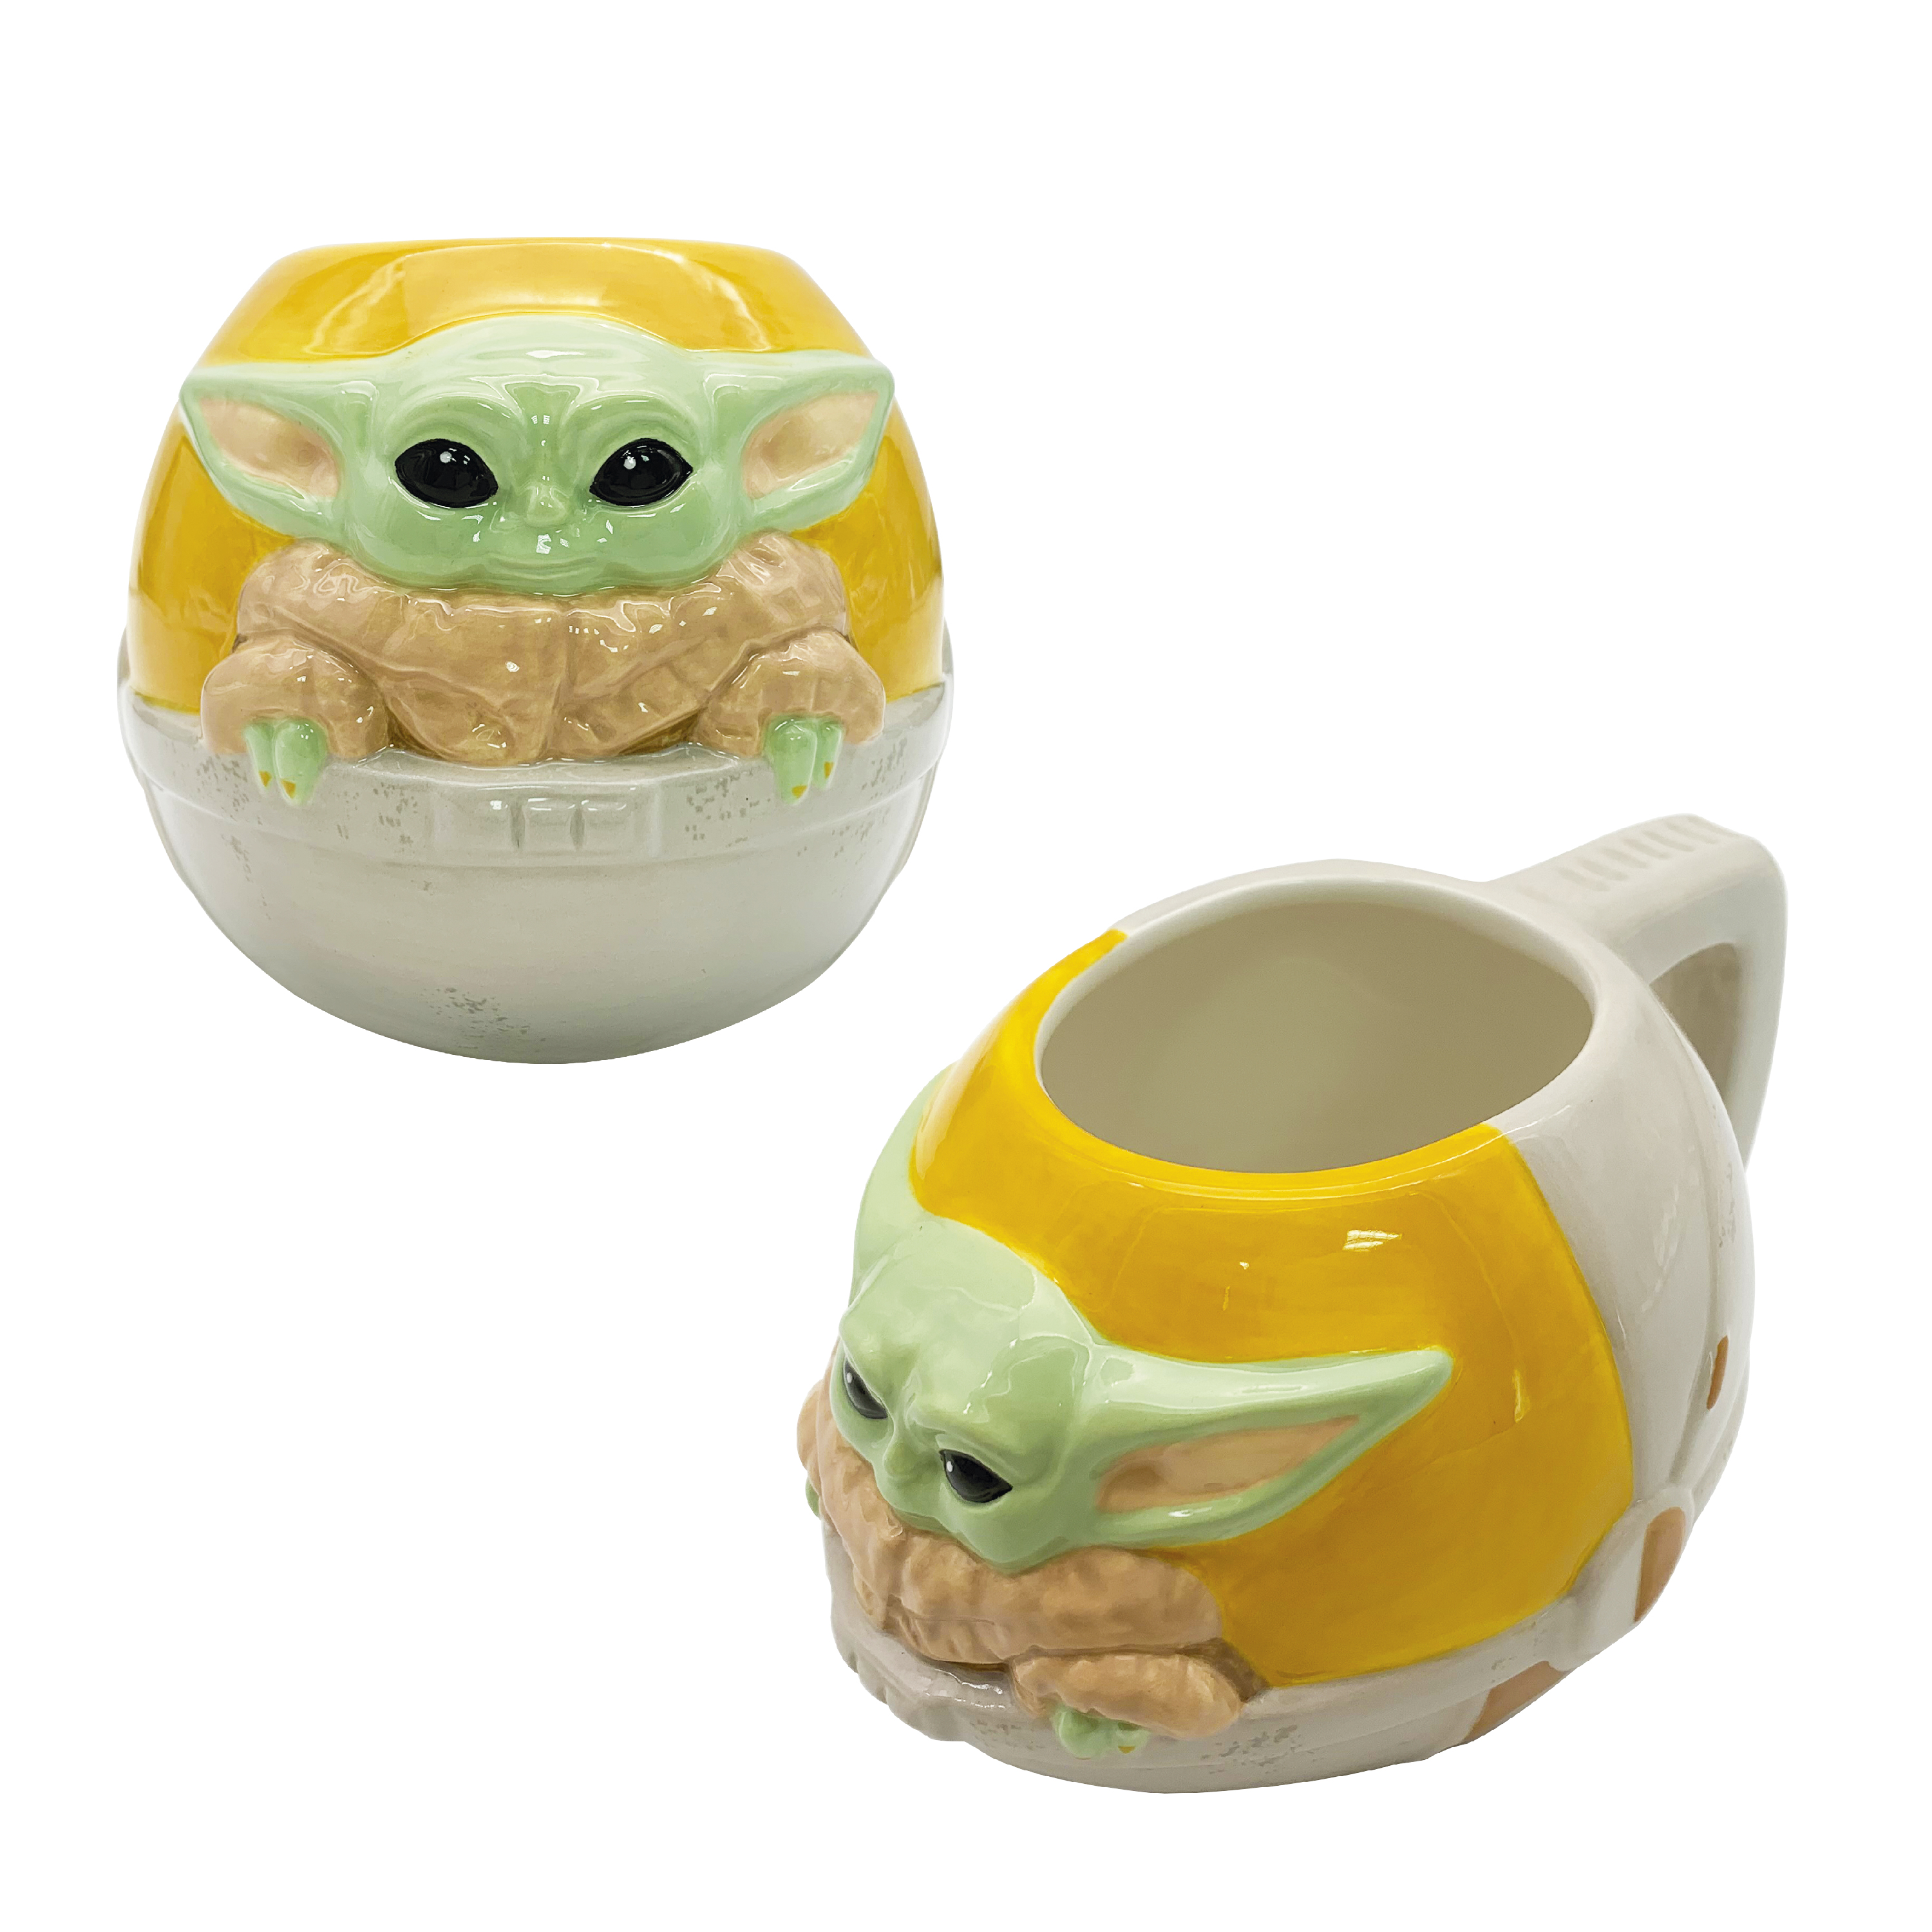 Star Wars: The Mandalorian 16 ounce Ceramic Coffee Mug, The Child (Baby Yoda) slideshow image 4